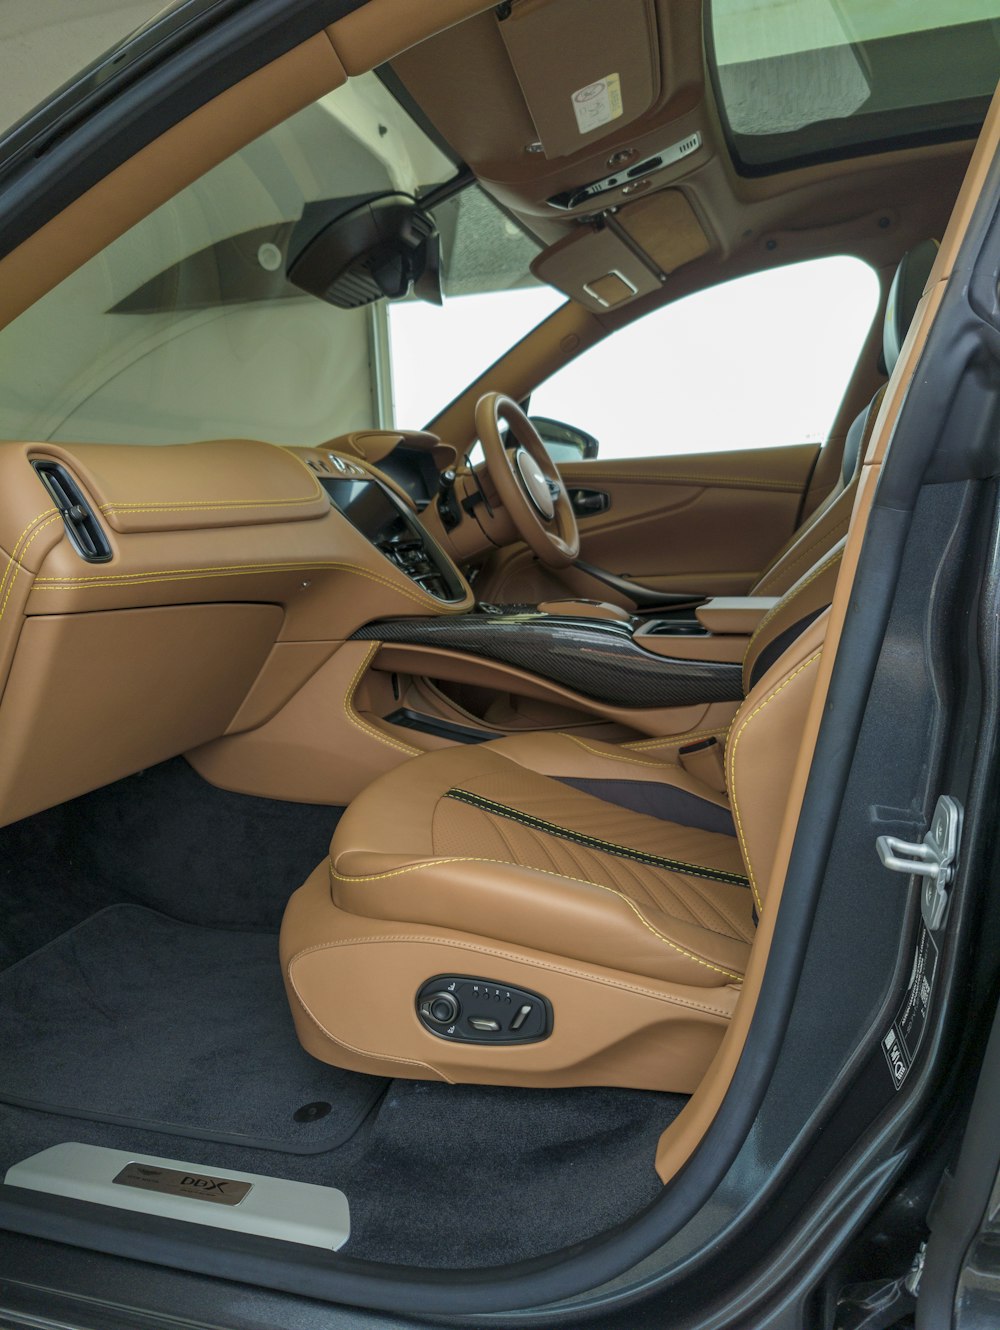 the interior of a car